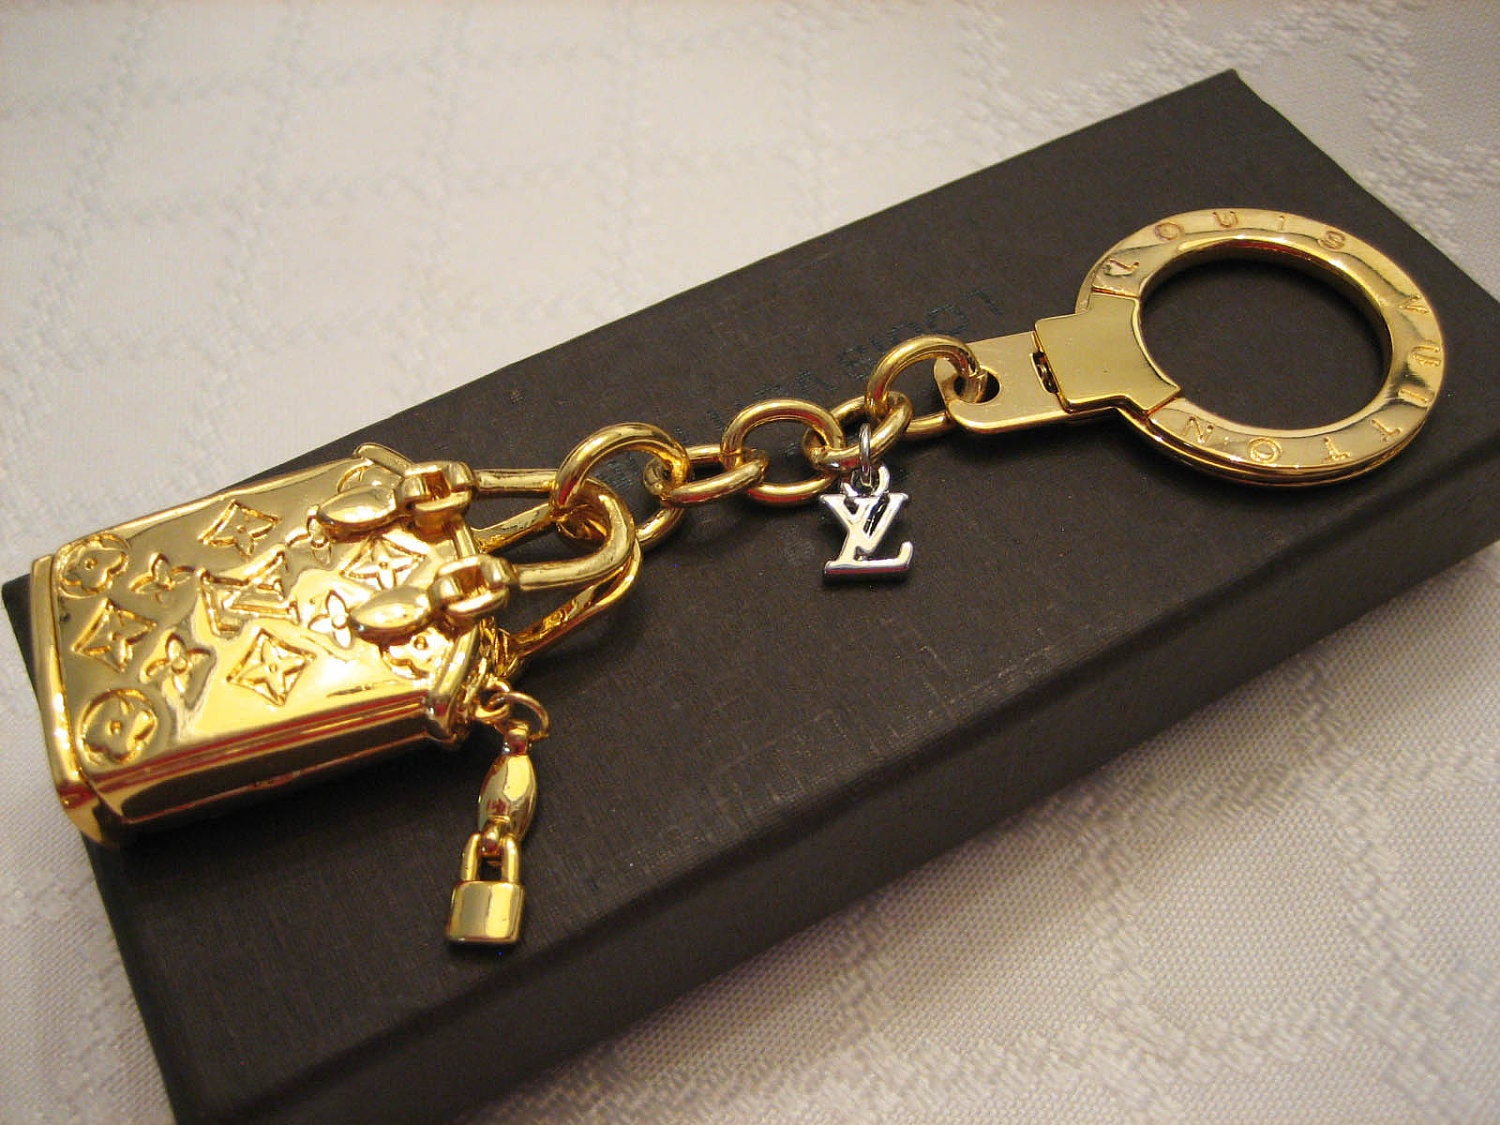 Louis Vuitton Key Chain Purse Charm Gold Lockit by shoppingforbags